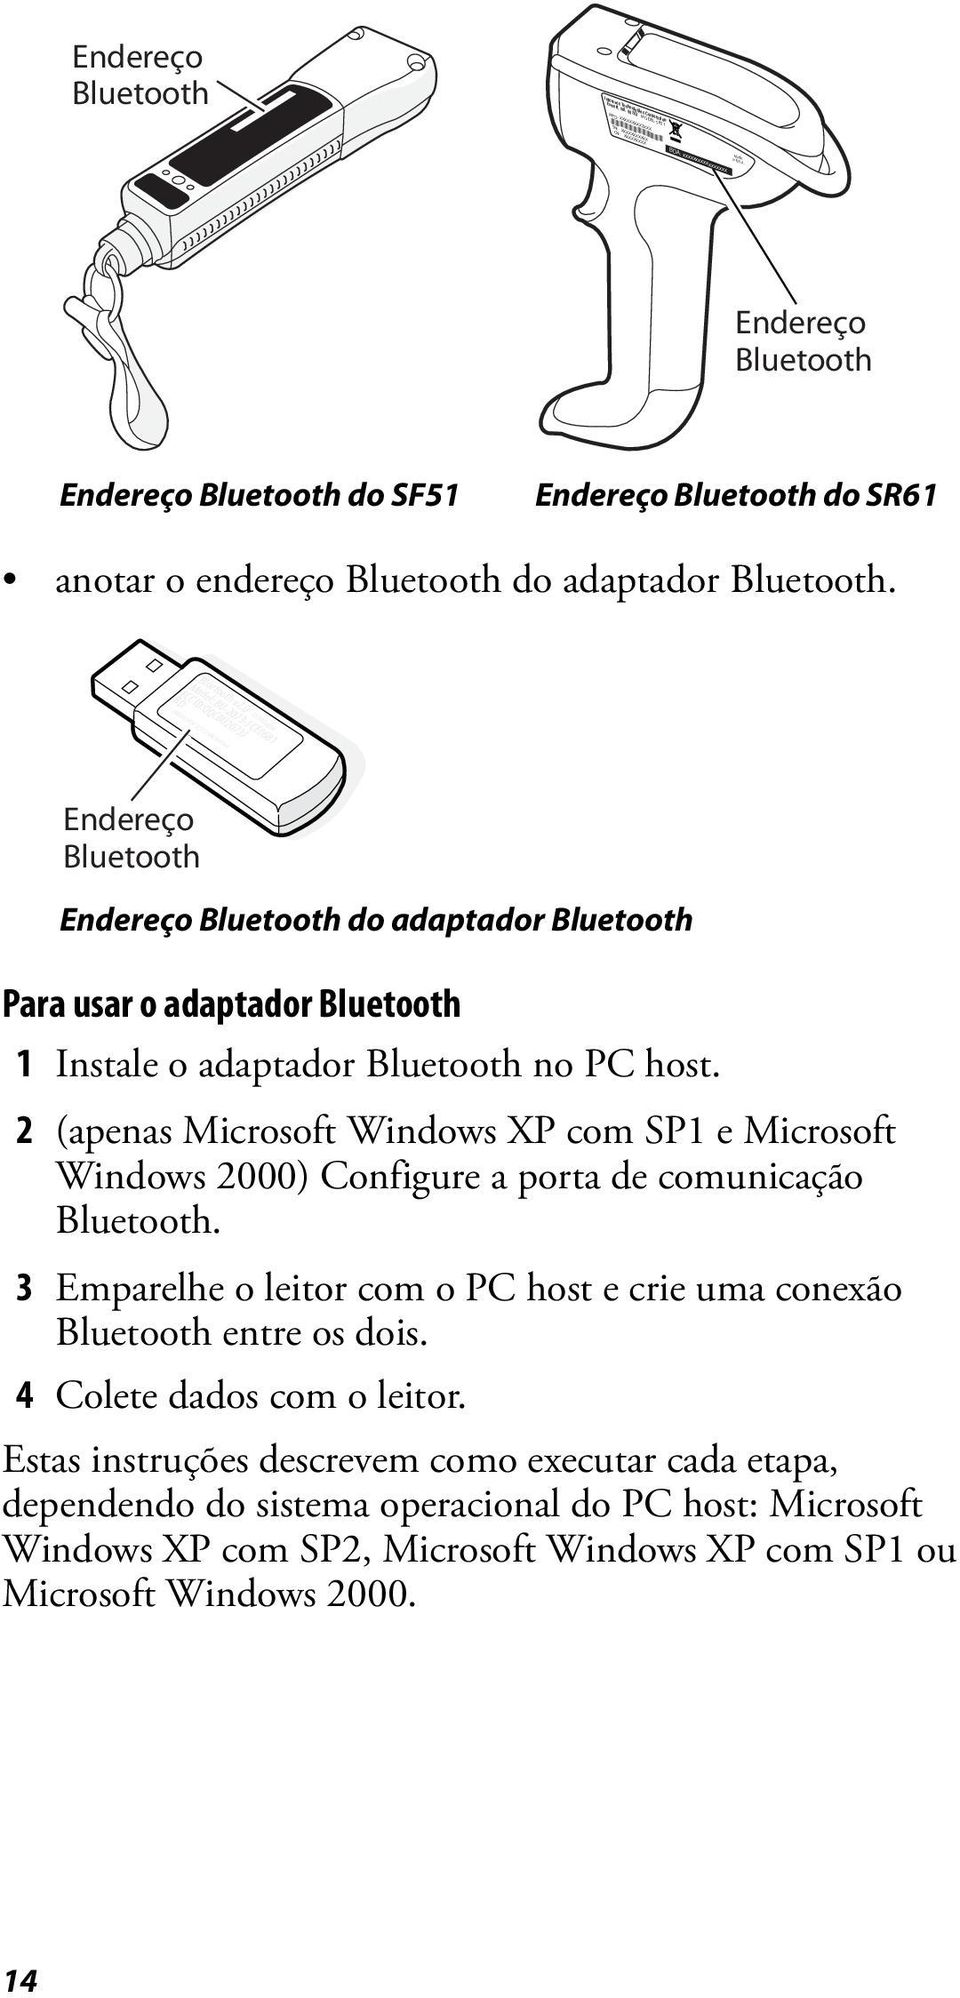 Endereço Bluetooth Intermec Technologies Corporation Everett, WA 98203 MODEL: SR51 MFD: XXXXXXXXX2XXX XXXXXXXXXXXX SN: XXXXXXXXXXX BDA: xxxxxxxxxxxxxxxxx Endereço Bluetooth Endereço Bluetooth do SF51